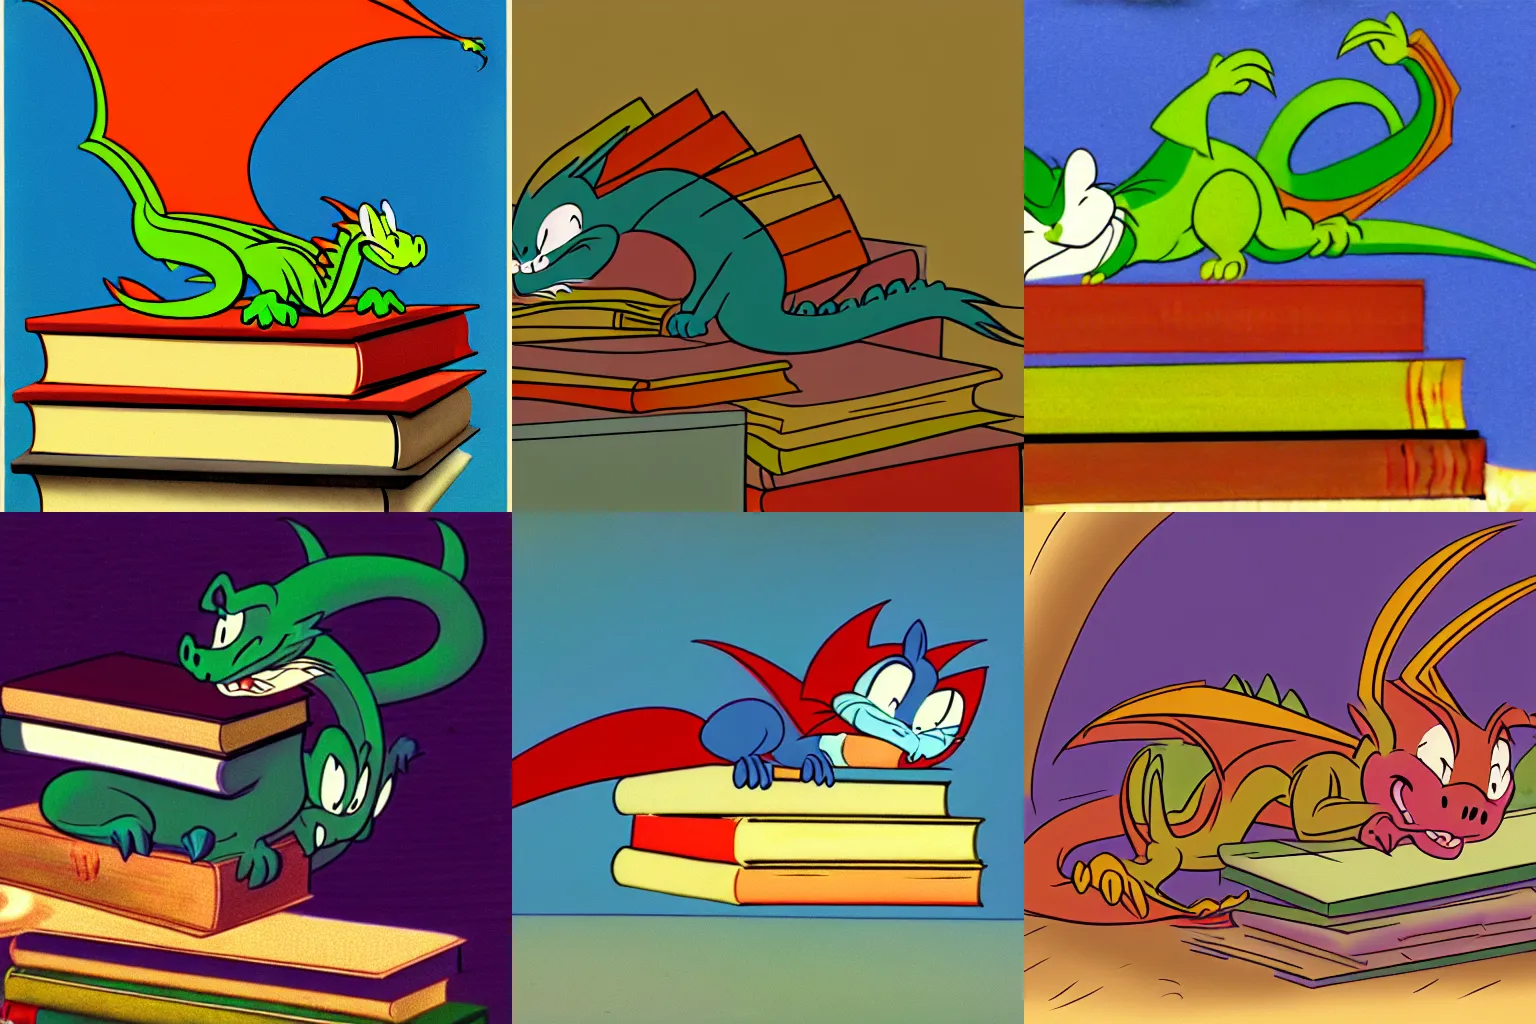 Prompt: Dragon sleeping on a hoard of books, by Chuck Jones, animation keyframe, looney tunes, technicolor, cartoon